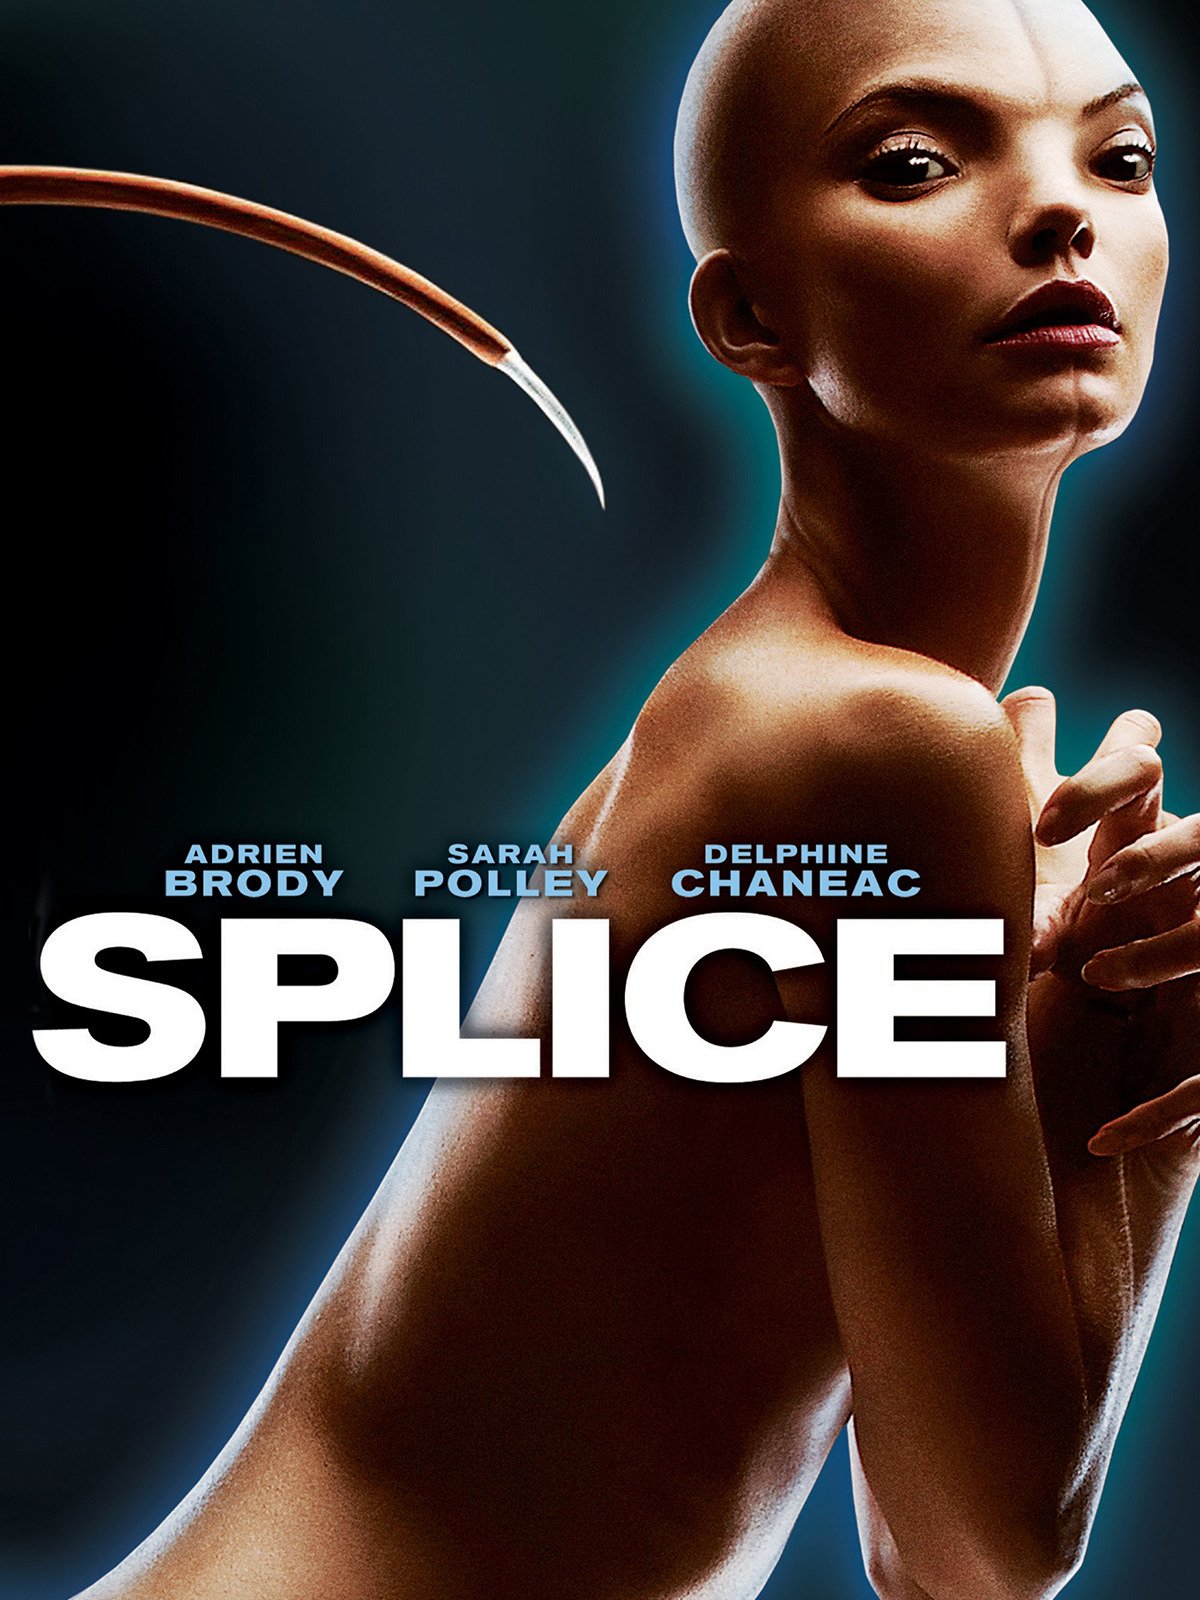 splice 2 full movie online